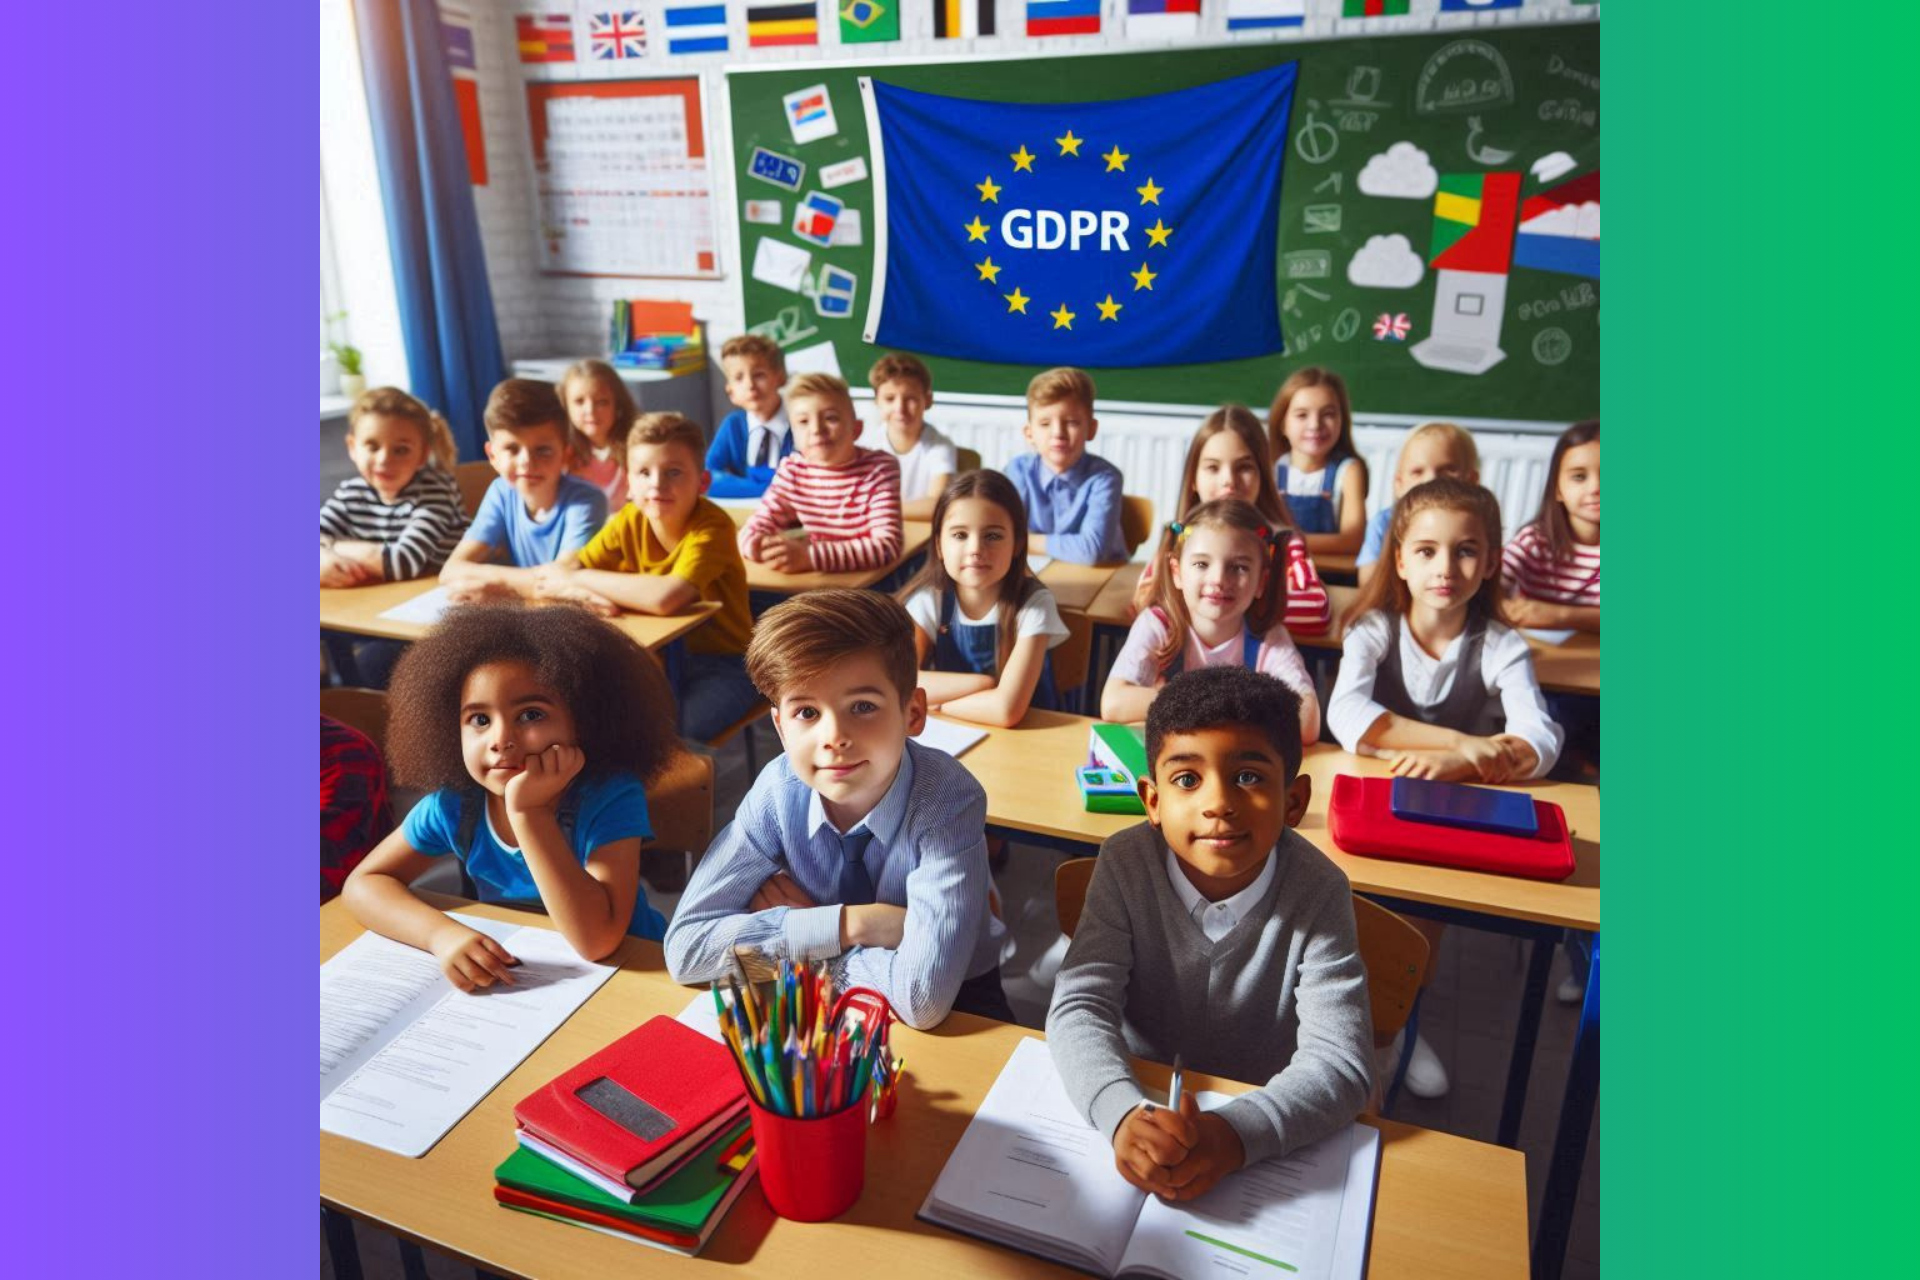 Microsoft 365 Education is allegedly breaking GDPR rules for school children in EU